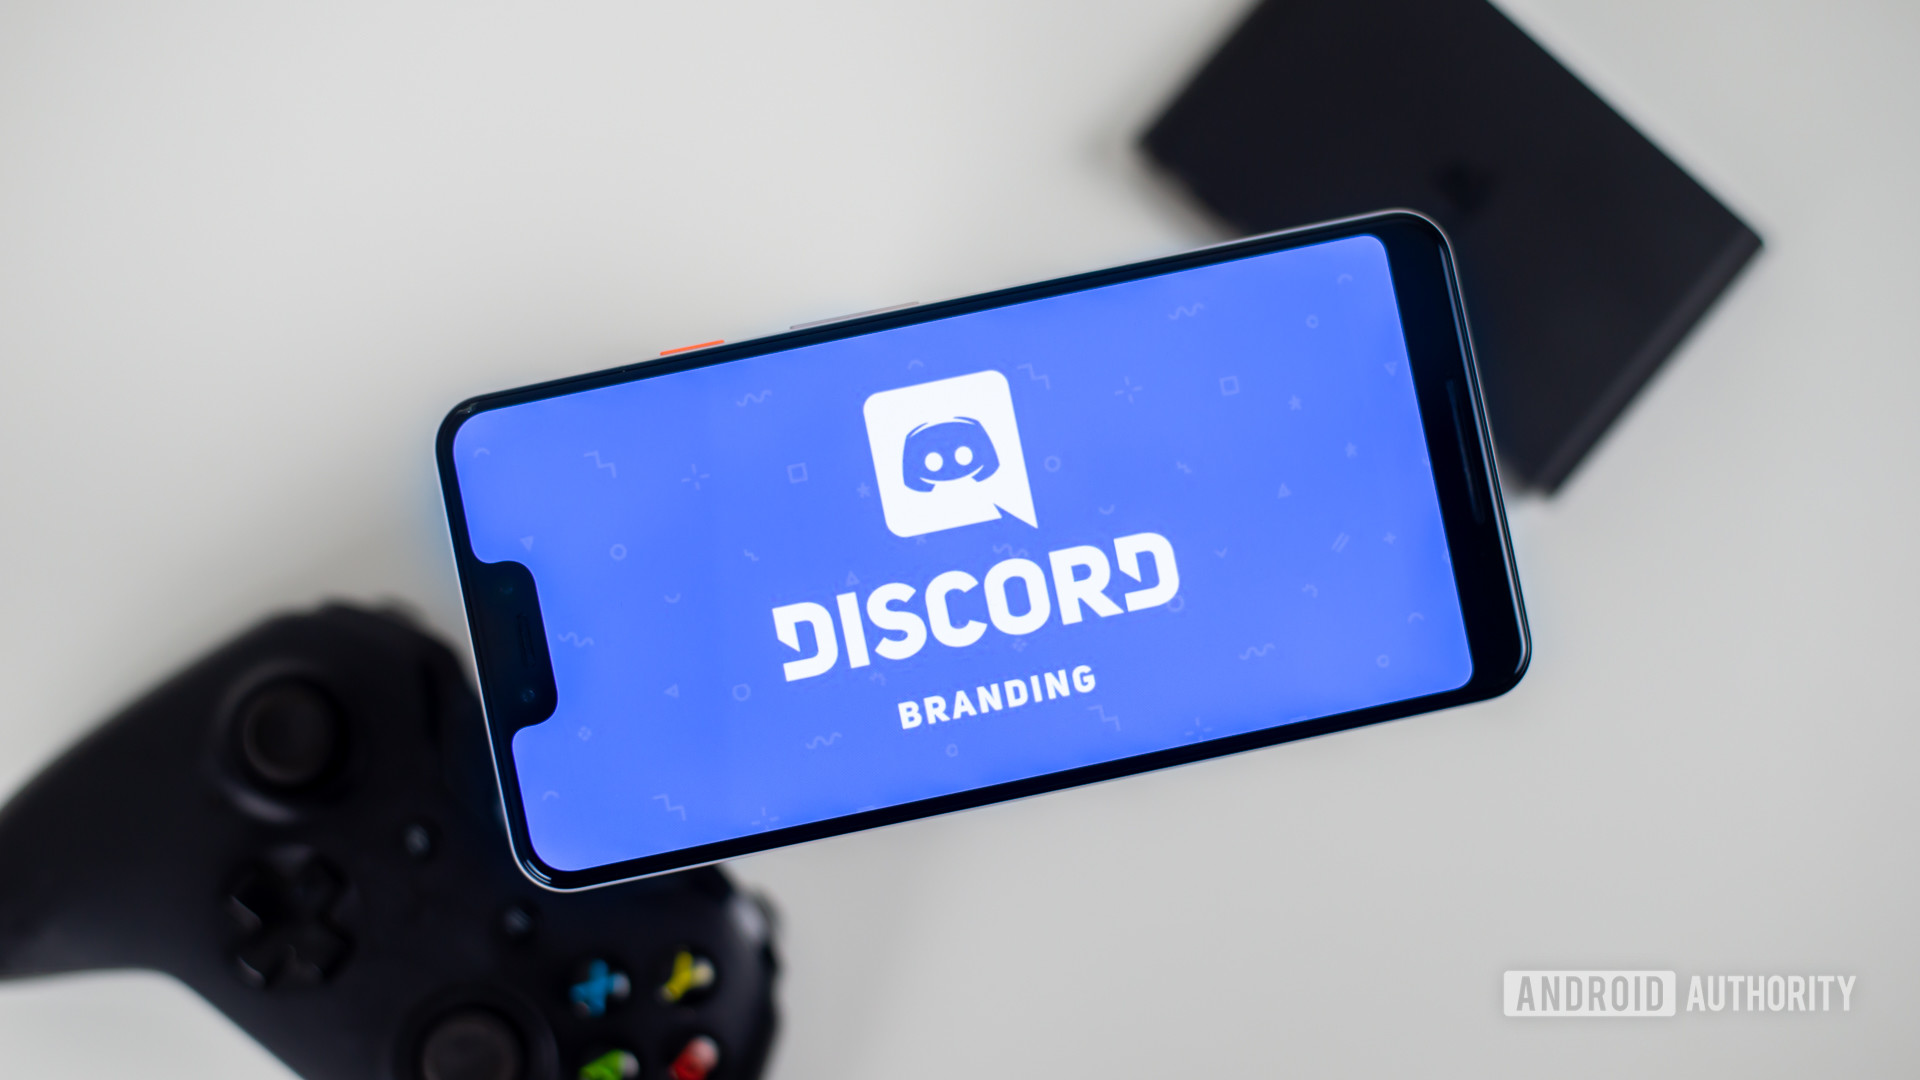 Discord on smartphone next to gamepad stock photo 1